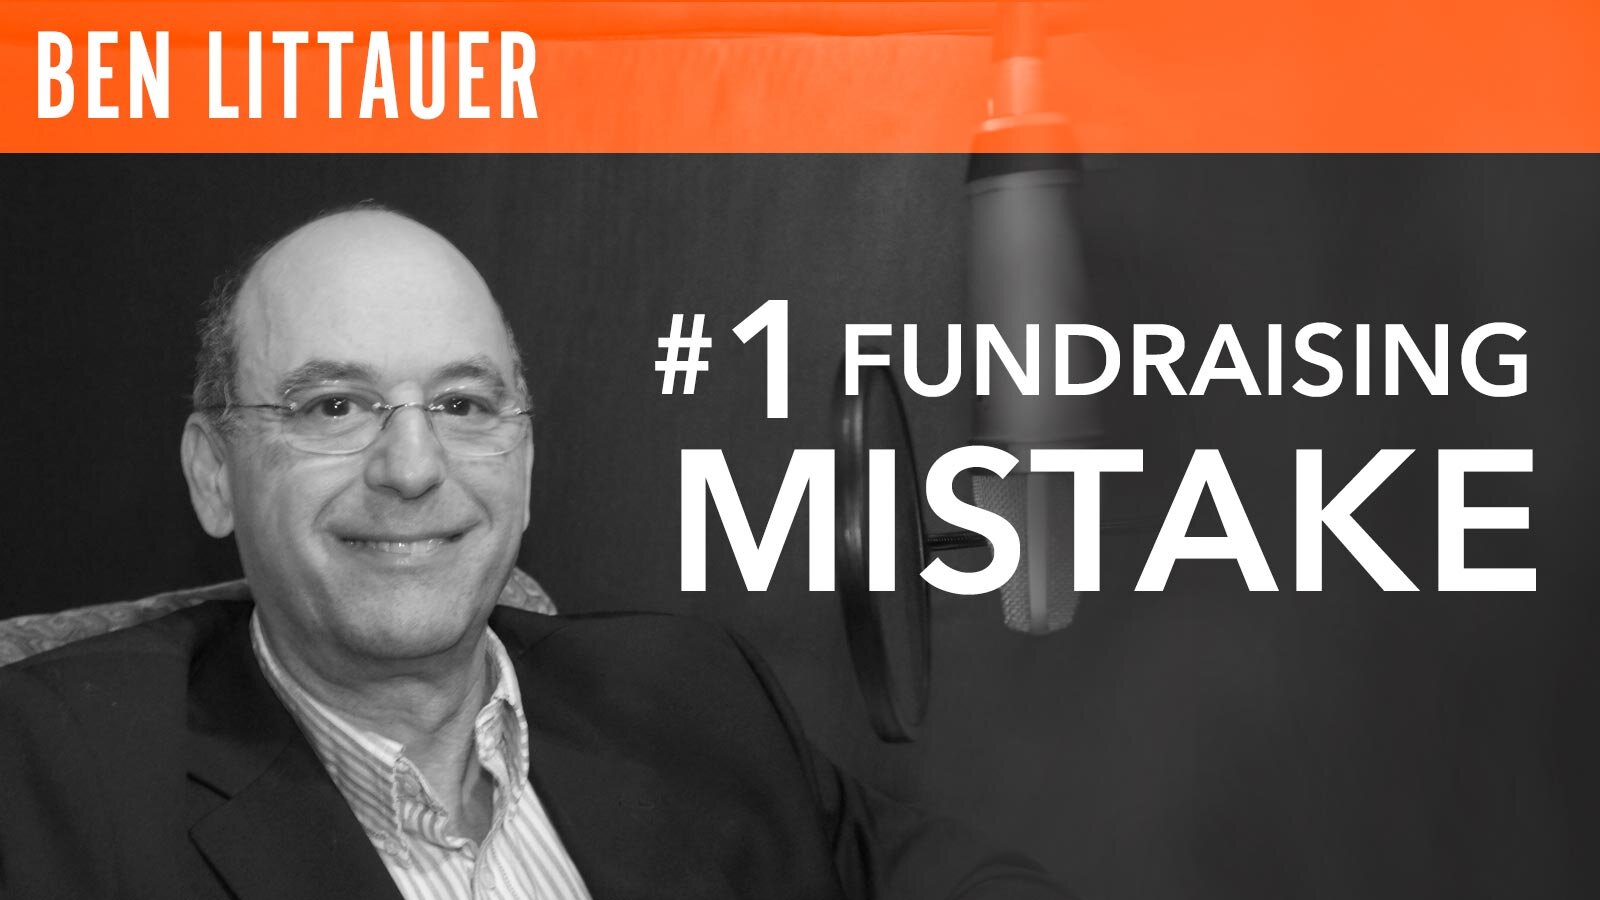 Ben Littauer, "#1 Fundraising Mistake"